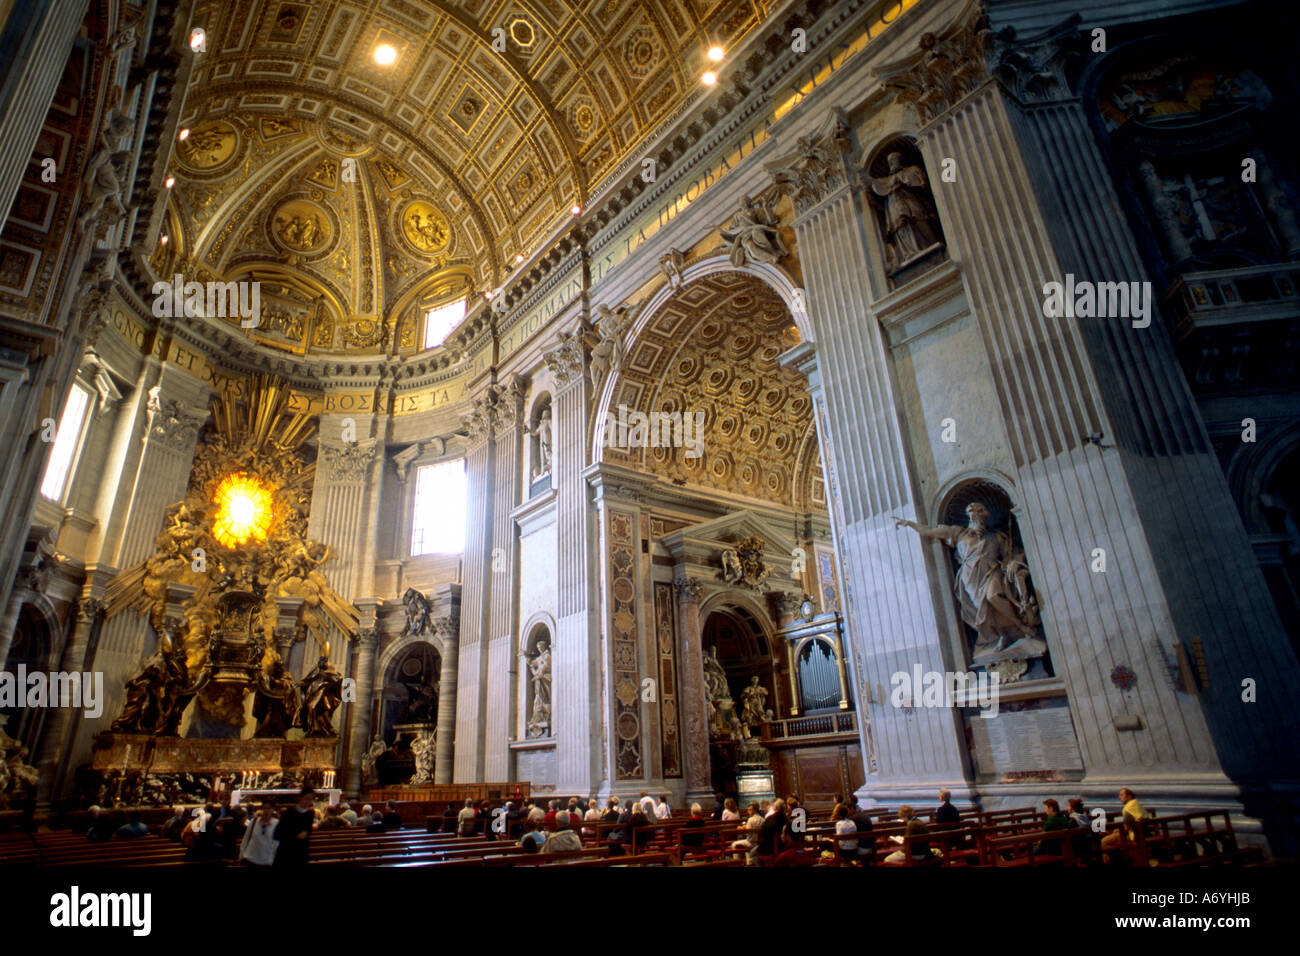 Italy Rome Vatican St Peter s Basilica interior Stock Photo